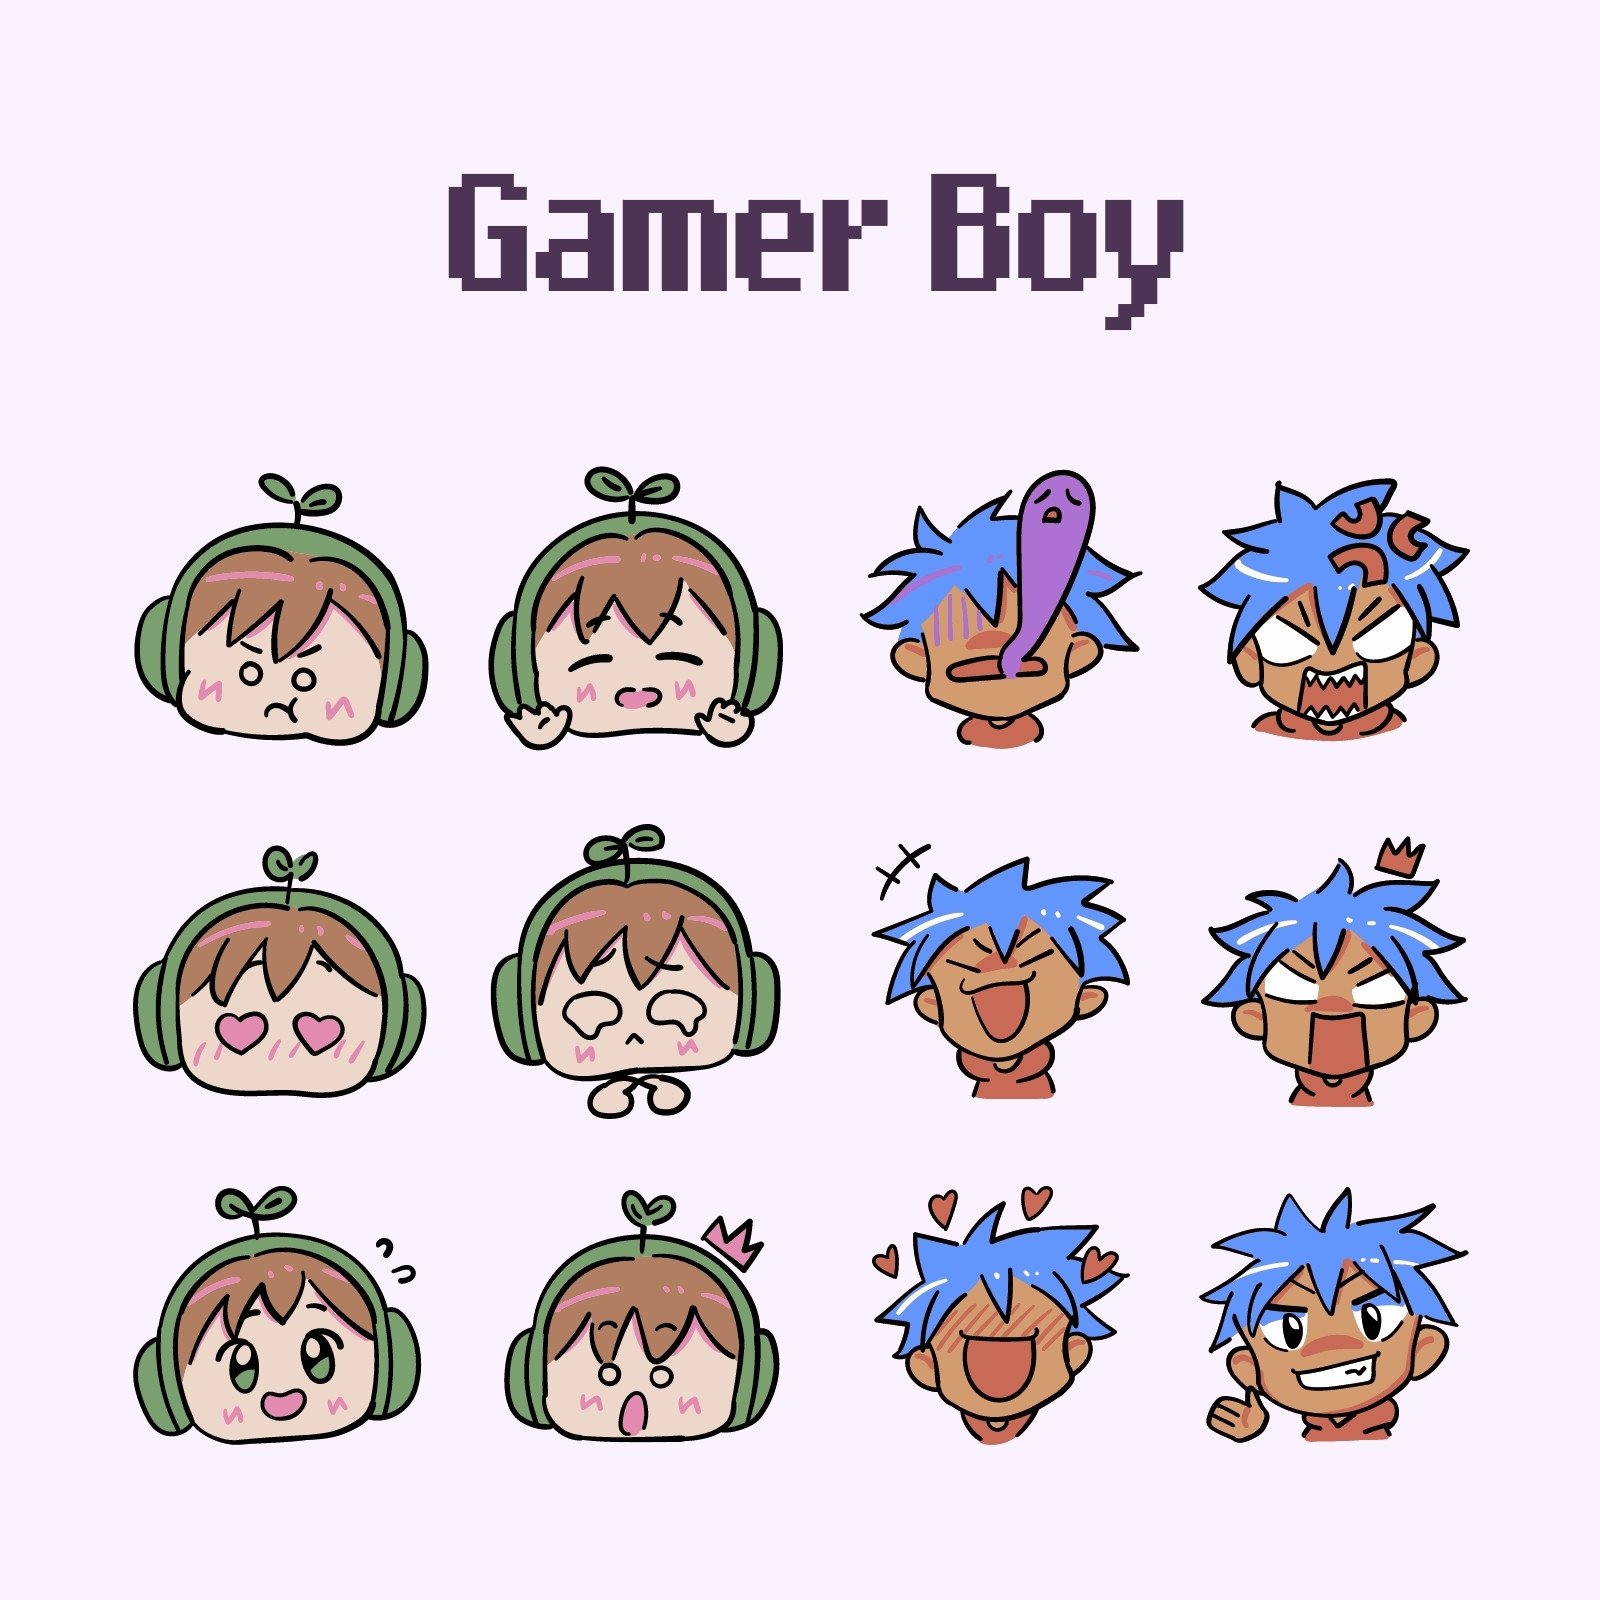 Green Brown and Blue Gamer Boy Emote